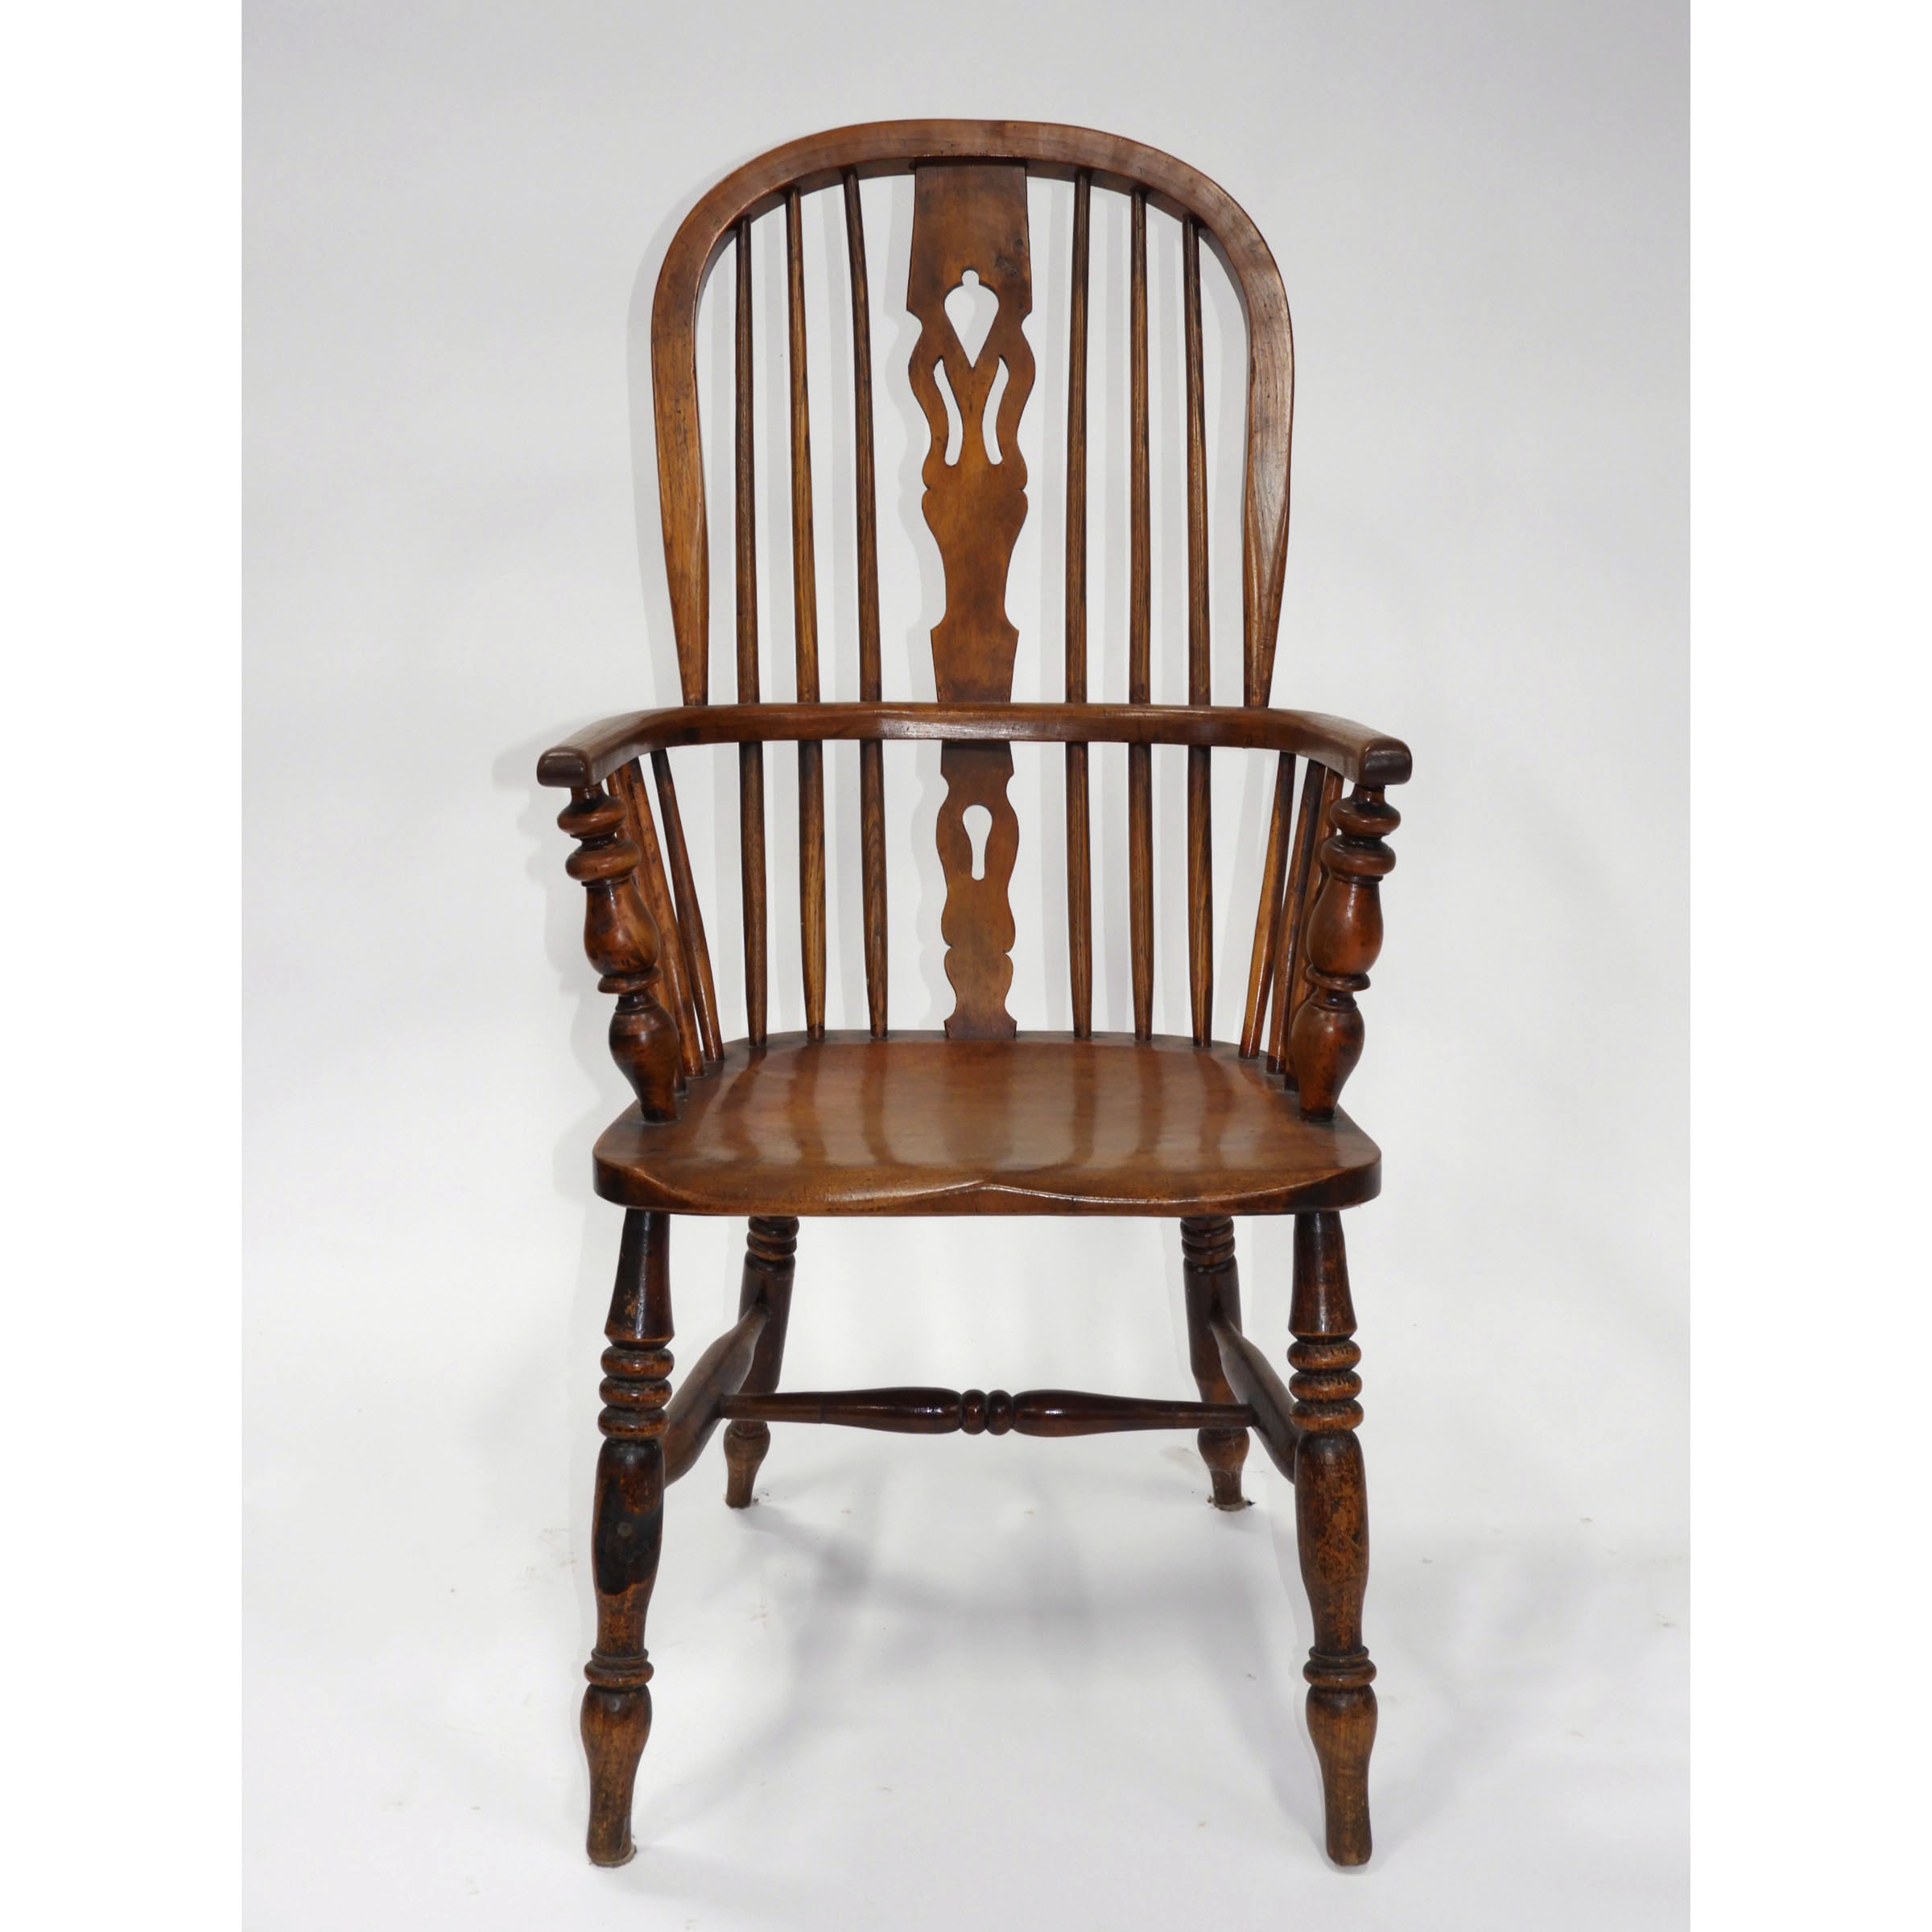 English Windsor Armchair, late 19th century